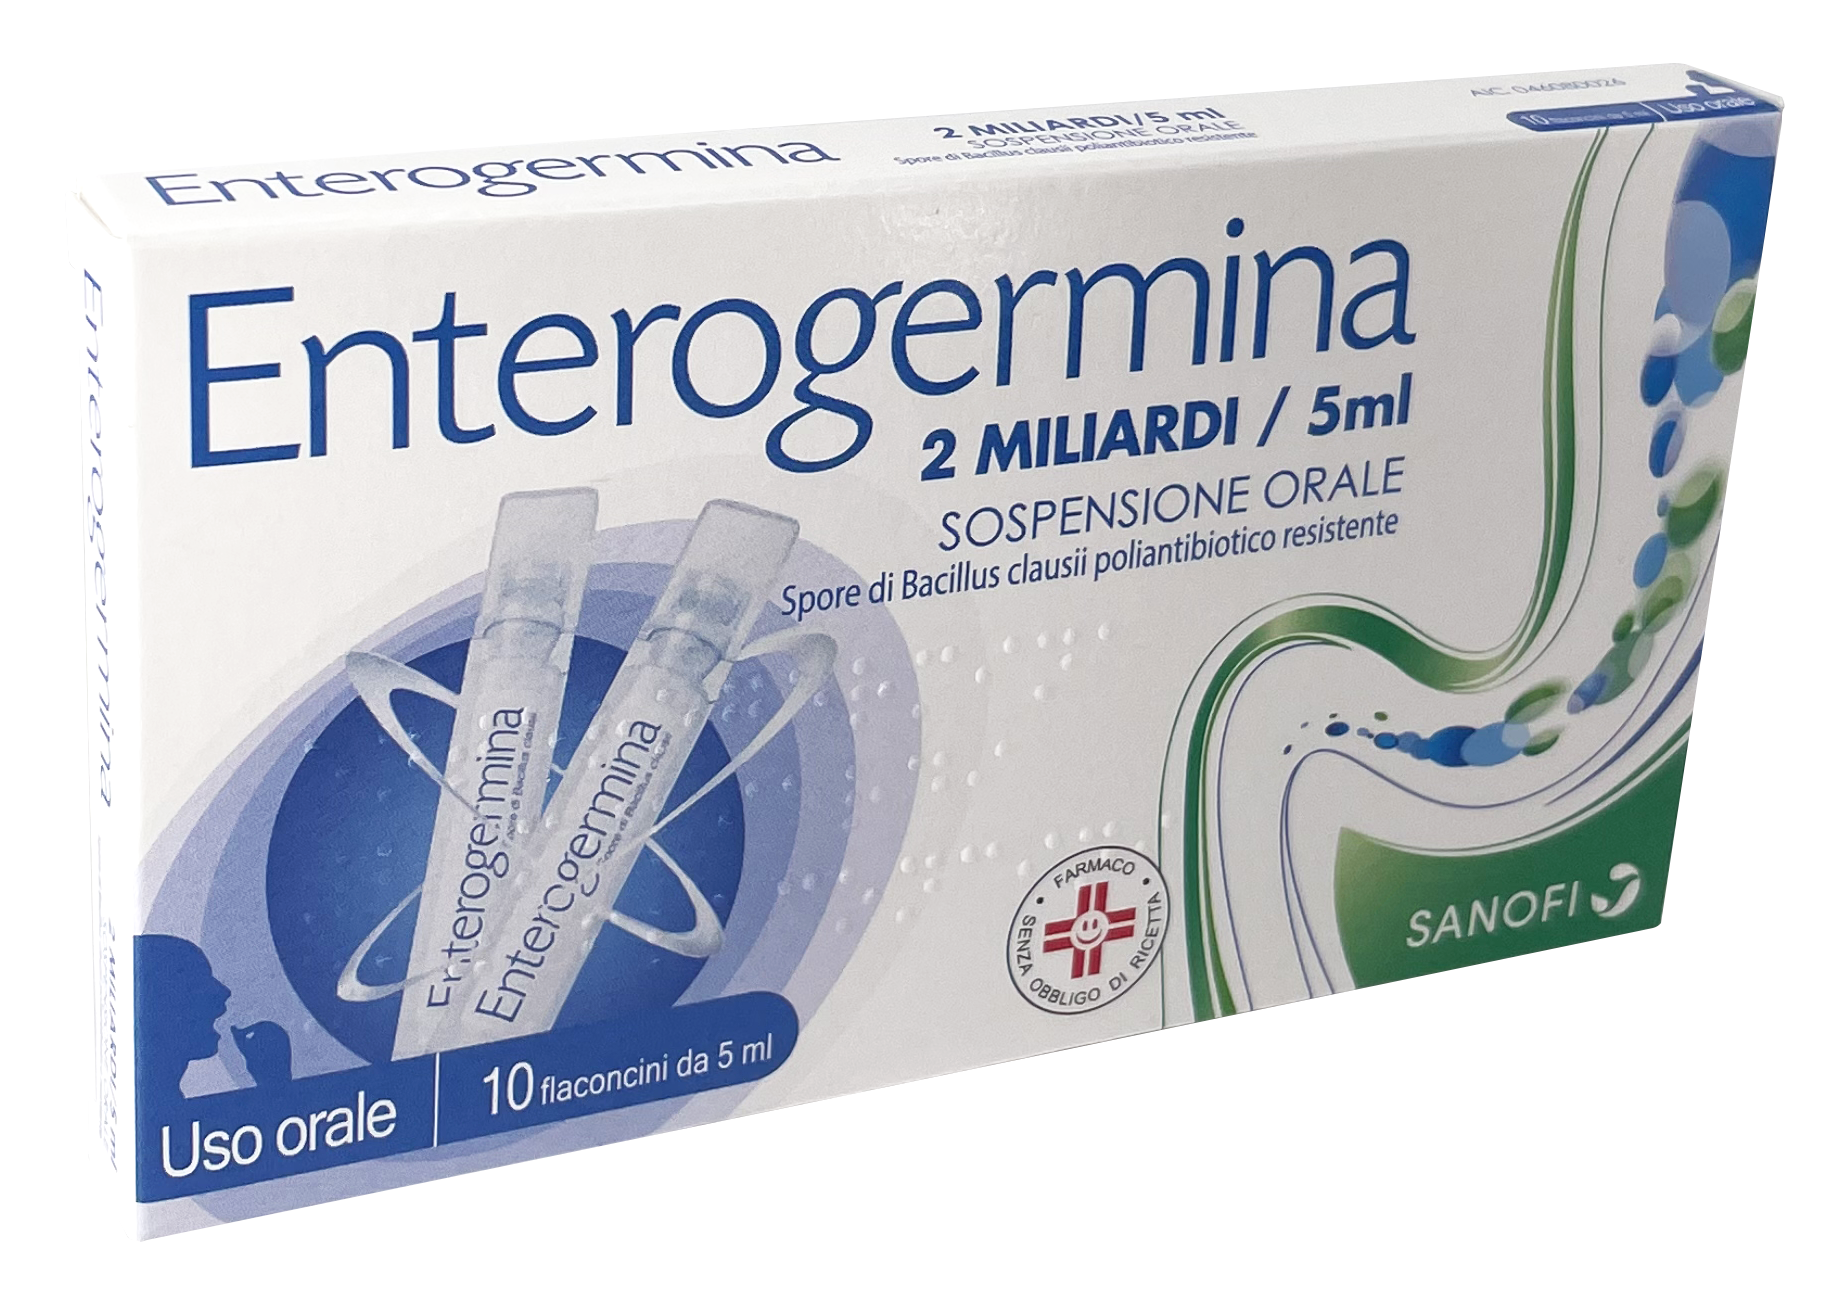 Enterogermina 2 miliardi 2 miliardi5 ml sospensione orale 10 flaconcini 5 ml  | Farmacia Online